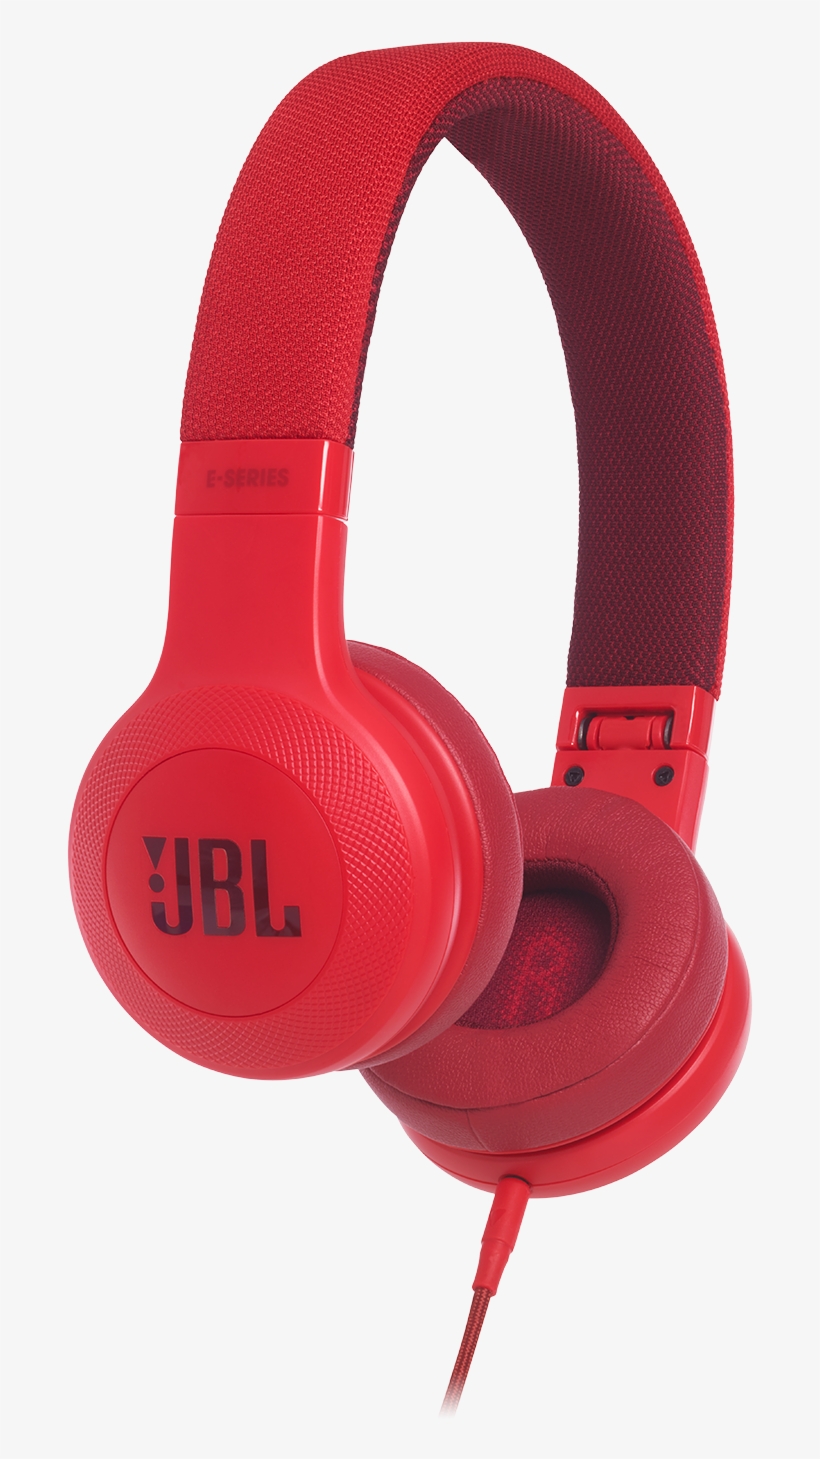 E35 - Jbl E35 On-ear Headphones - Red, transparent png #5325442